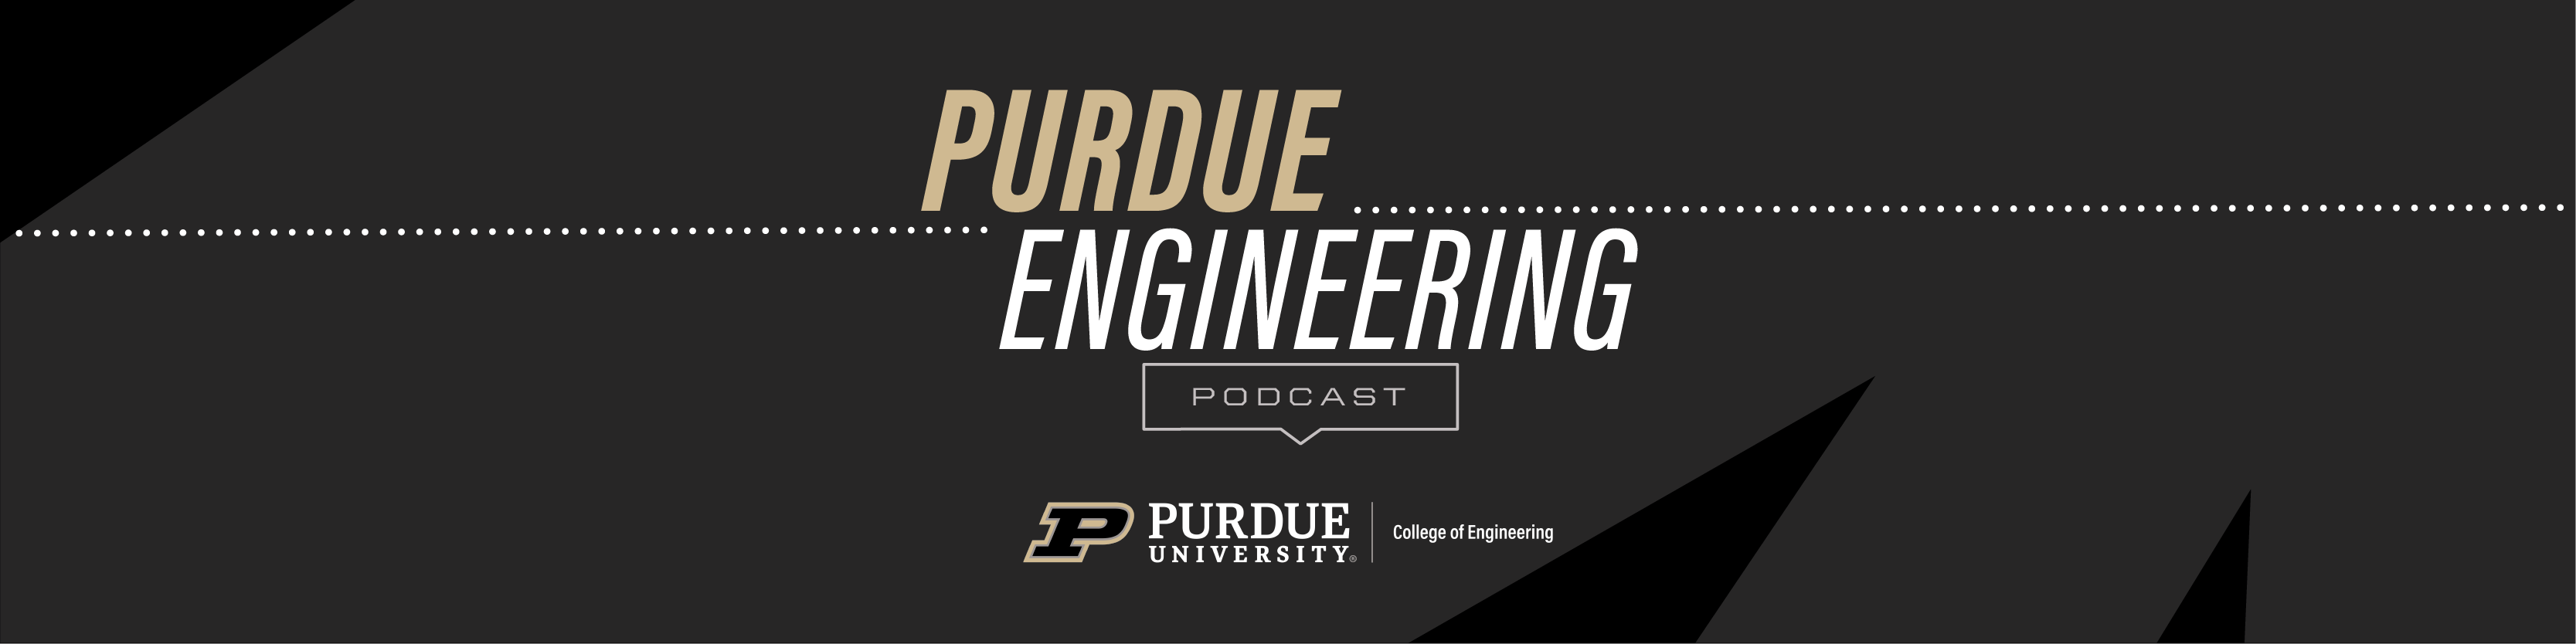 Purdue Engineering Podcast